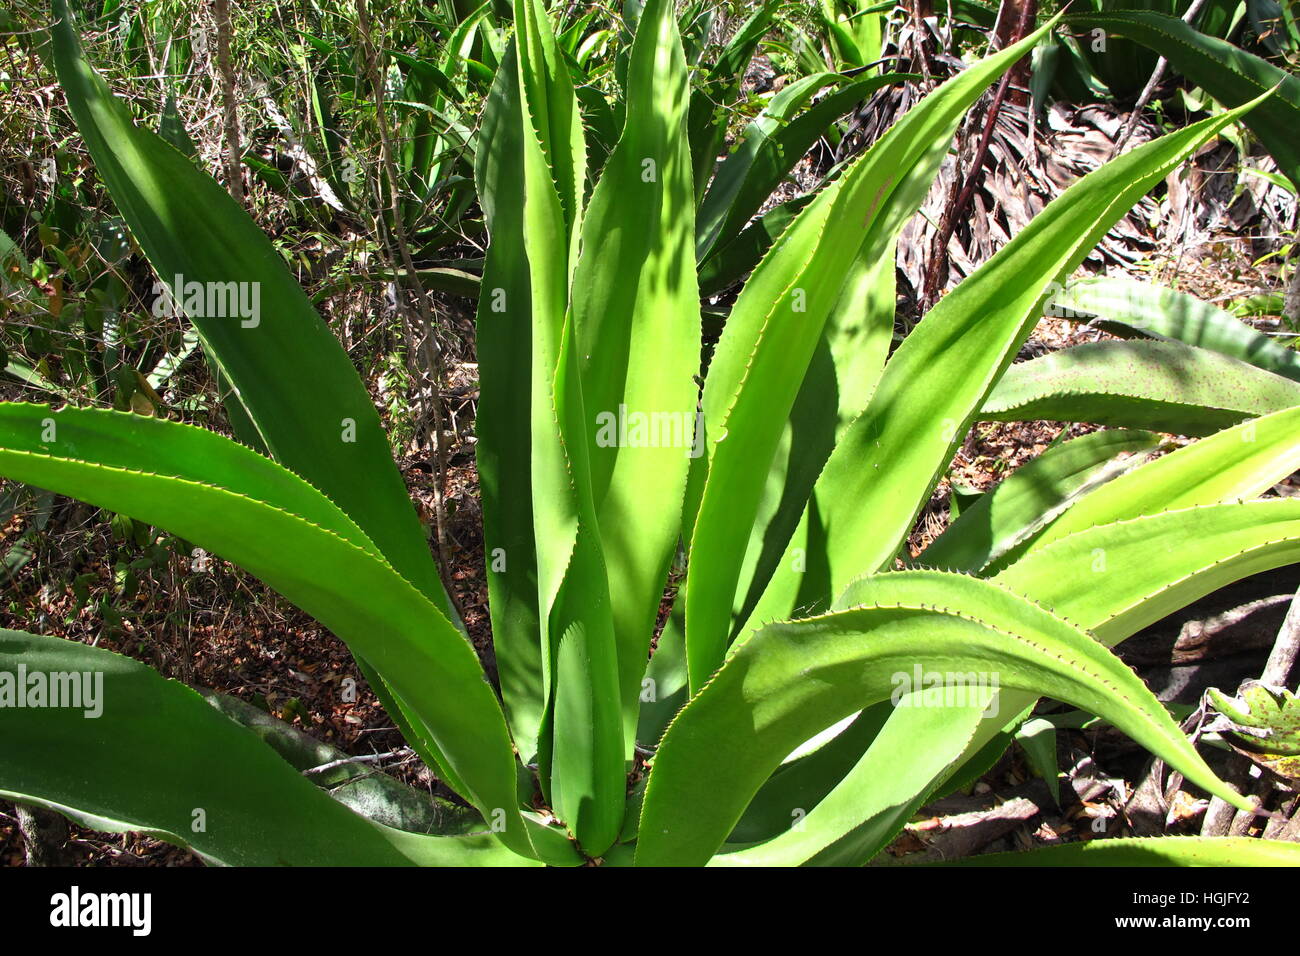 Spiky leaves of Tropical Aloe Vera plant Stock Photo